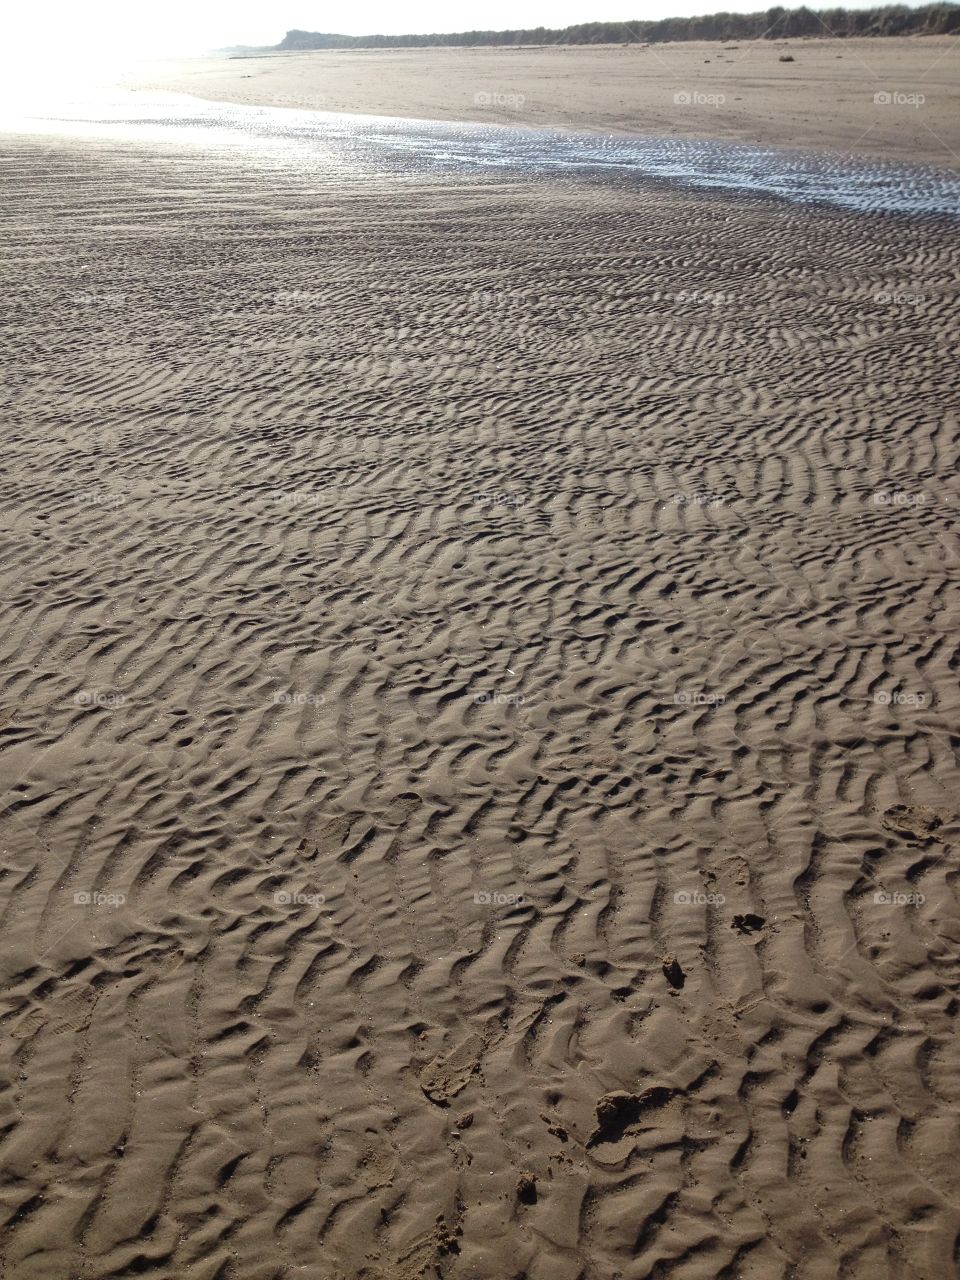 Beach patterns